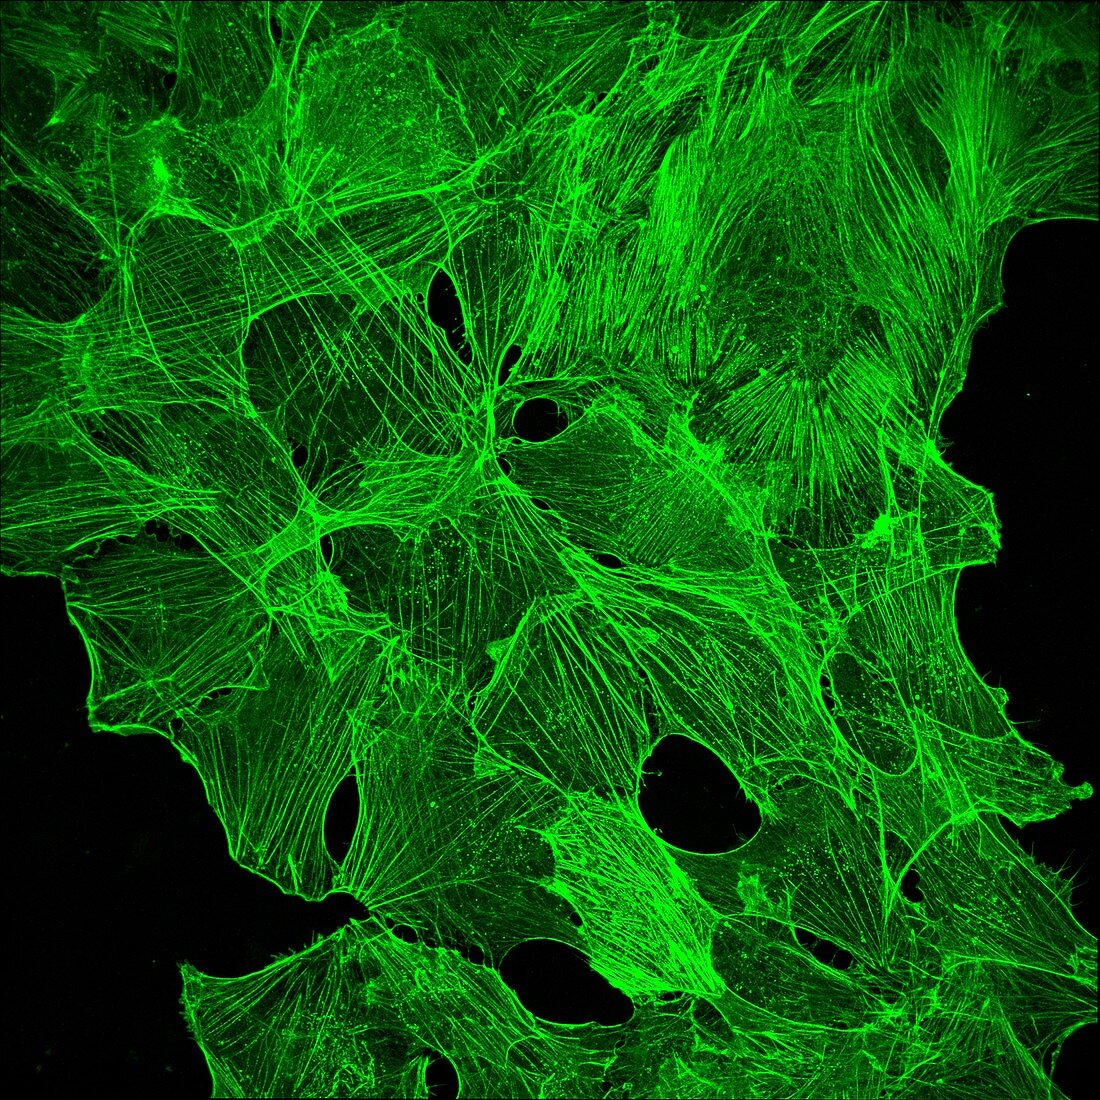 Cancer cells green, light micrograph